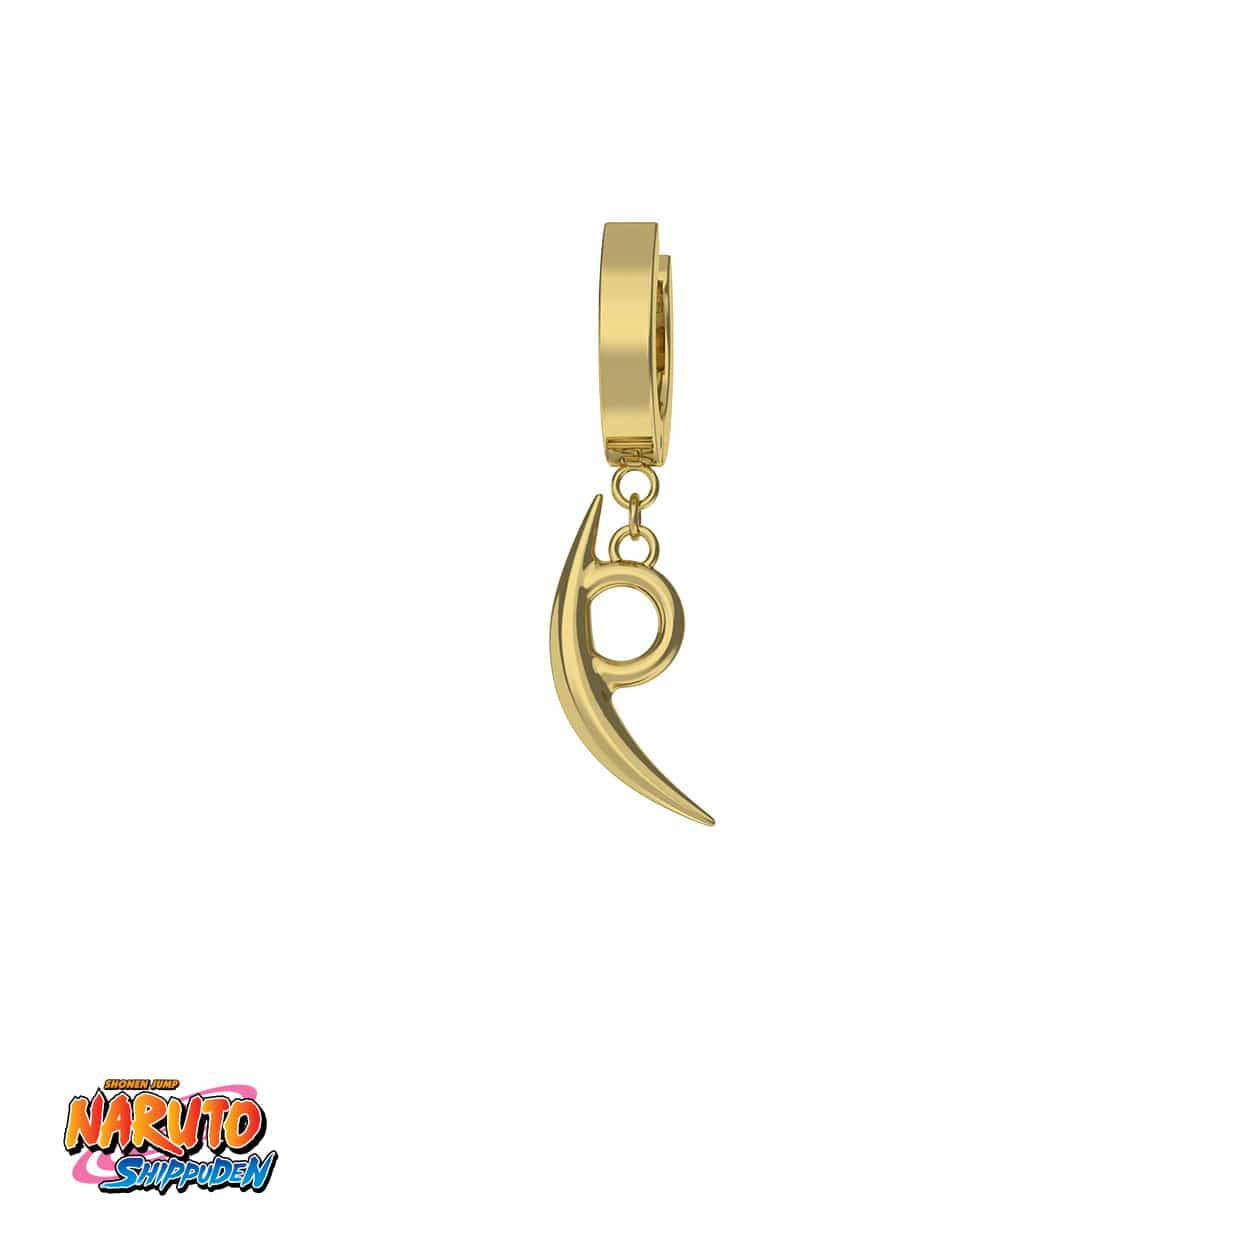 Naruto™ Orochimaru Earring